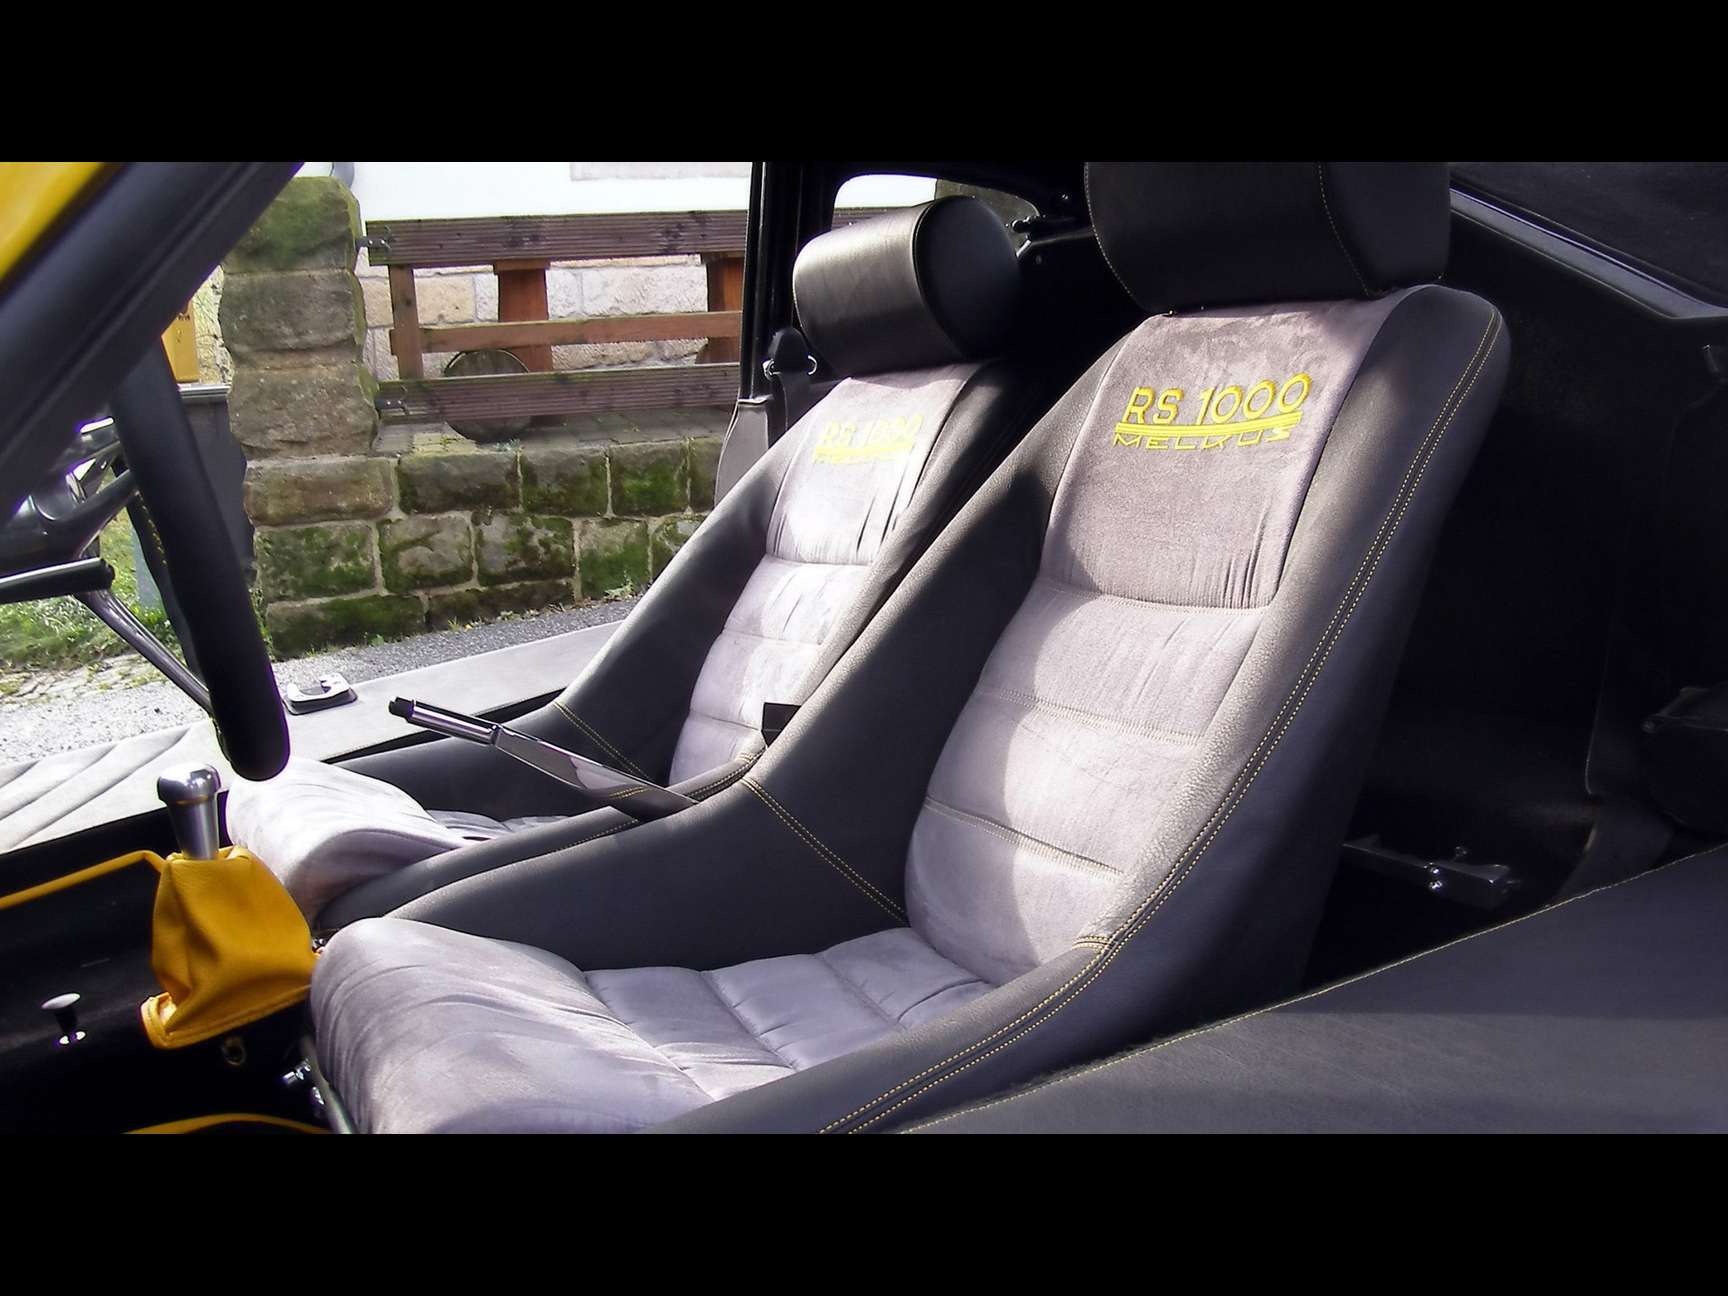 Melkus RS 1000